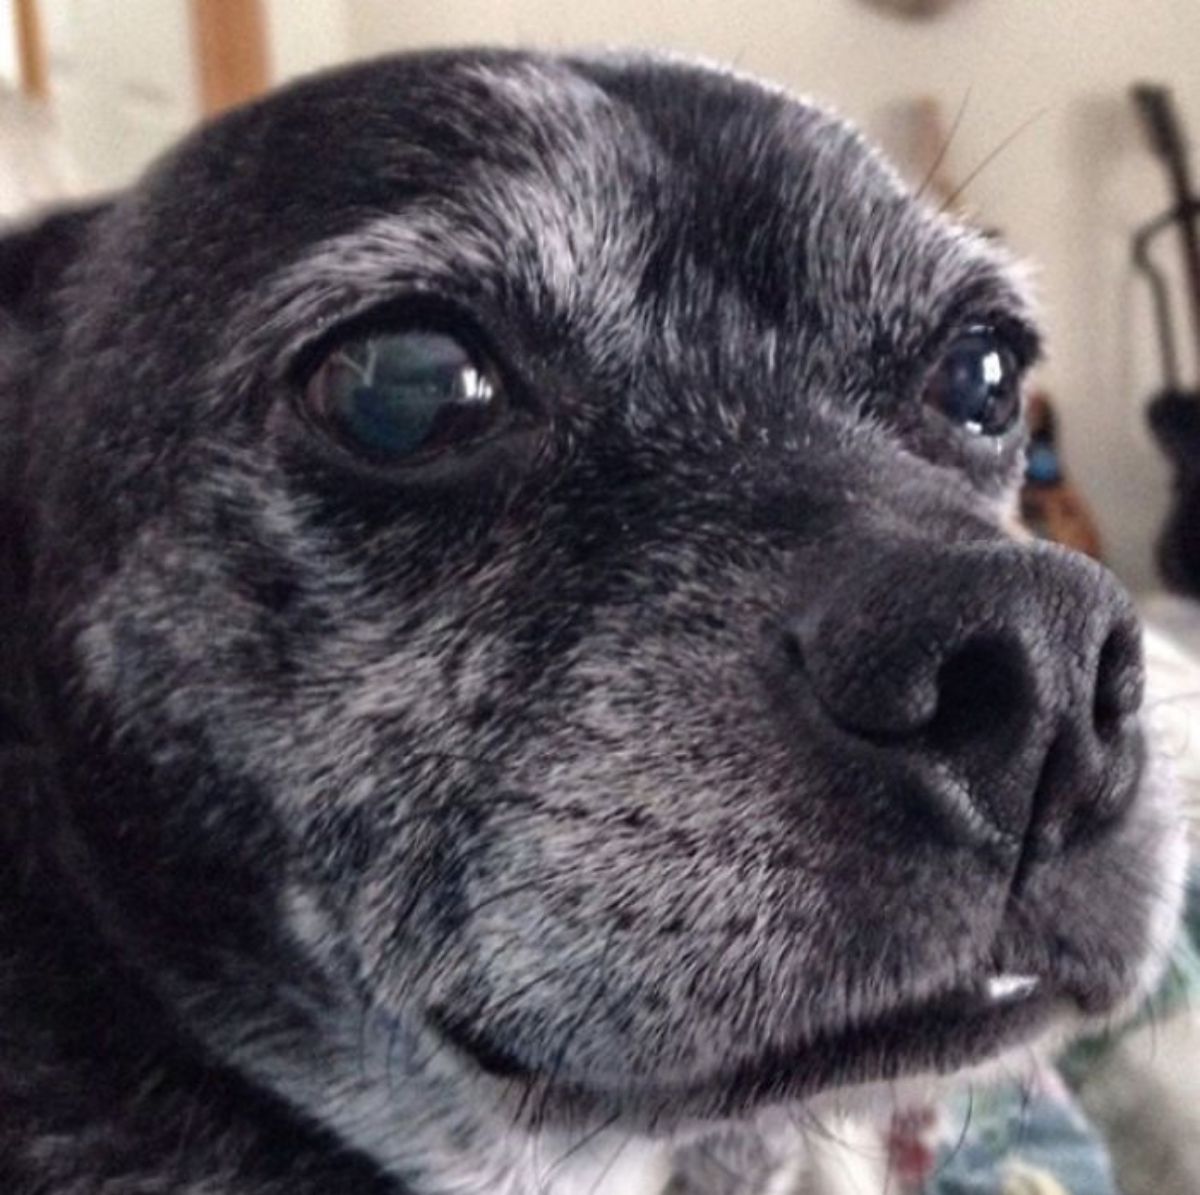 close up of old black dog's face